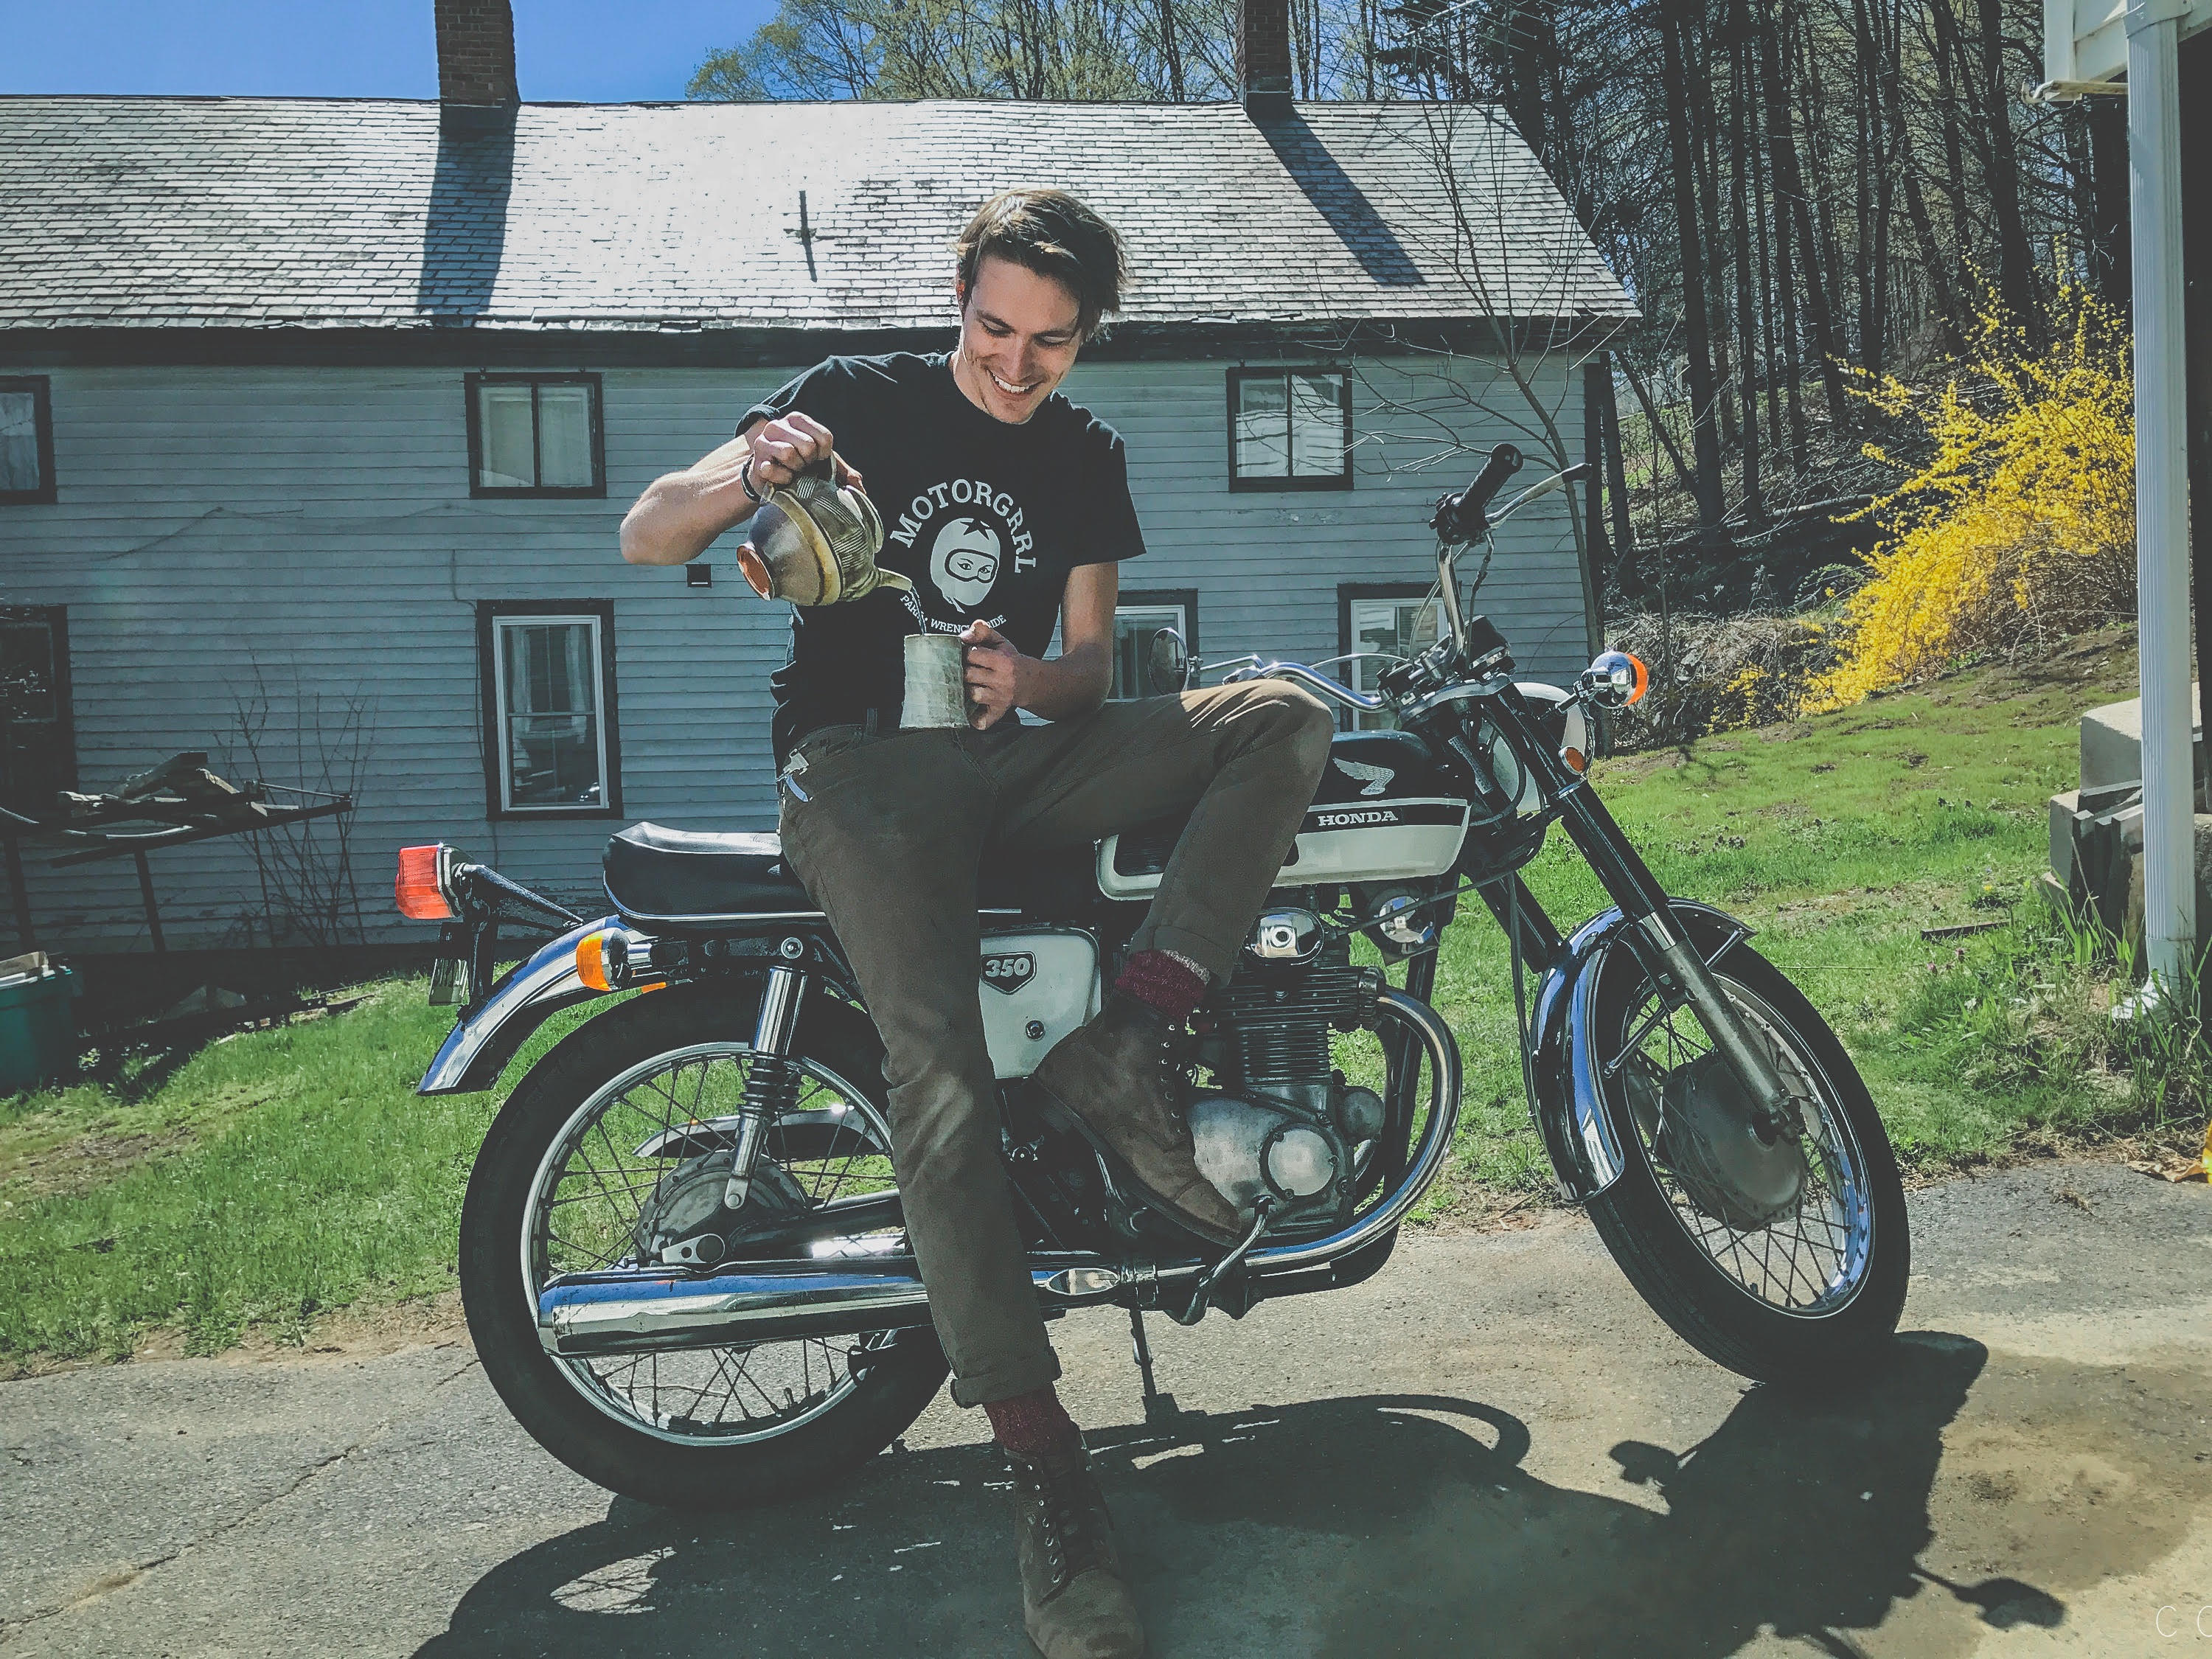 Josh Speers, the motopotter